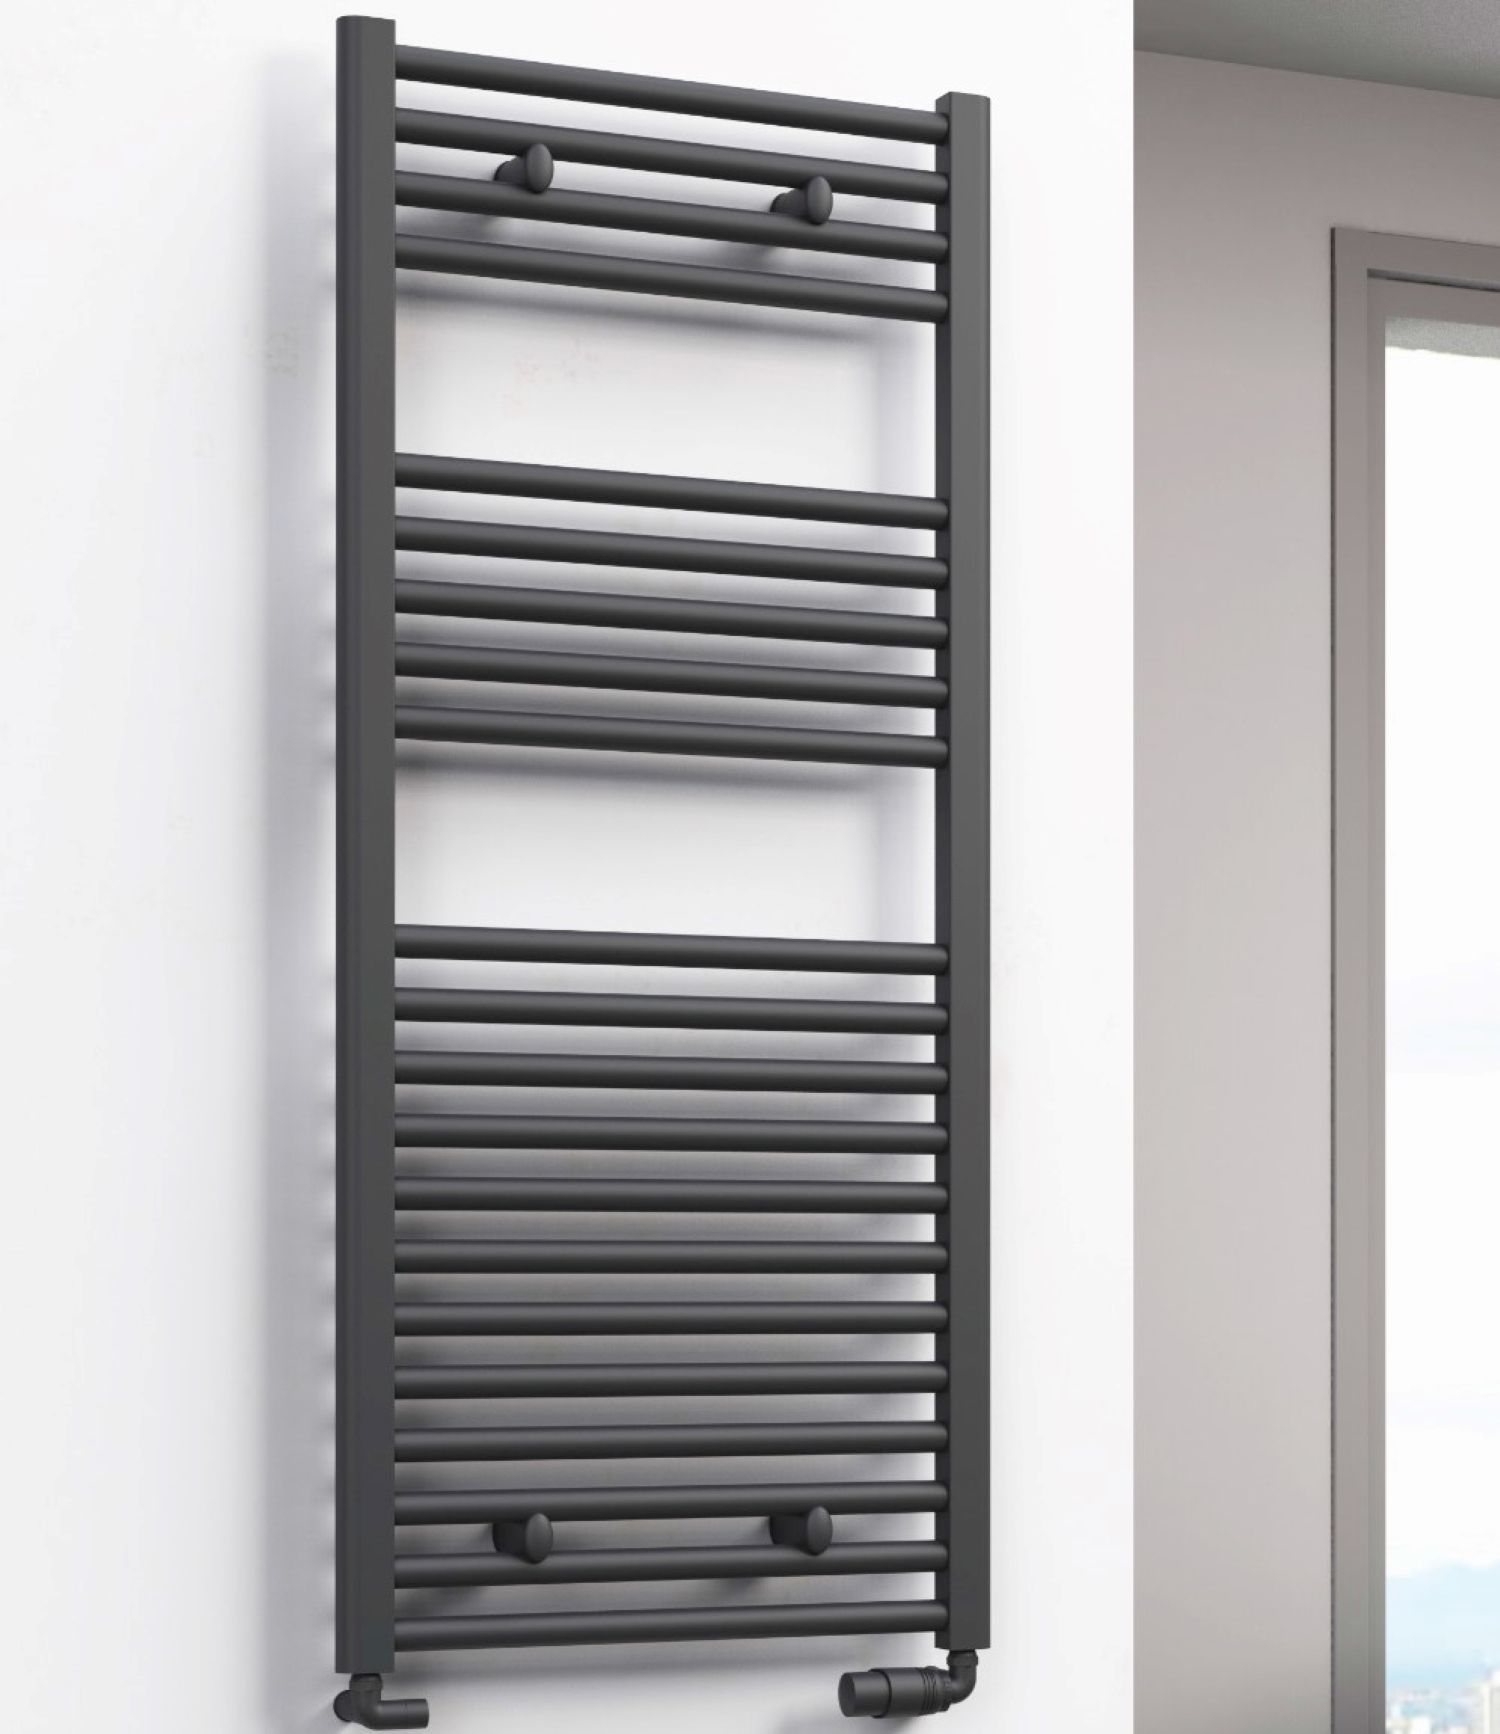 Anthracite Tower Rail Rack 1200 x 600mm Traditional Flat Panel Designer Bathroom Heated Radiatior Horizontal Towel Warmer Tower Rail Ladder Wall Mounted for Bathroom 